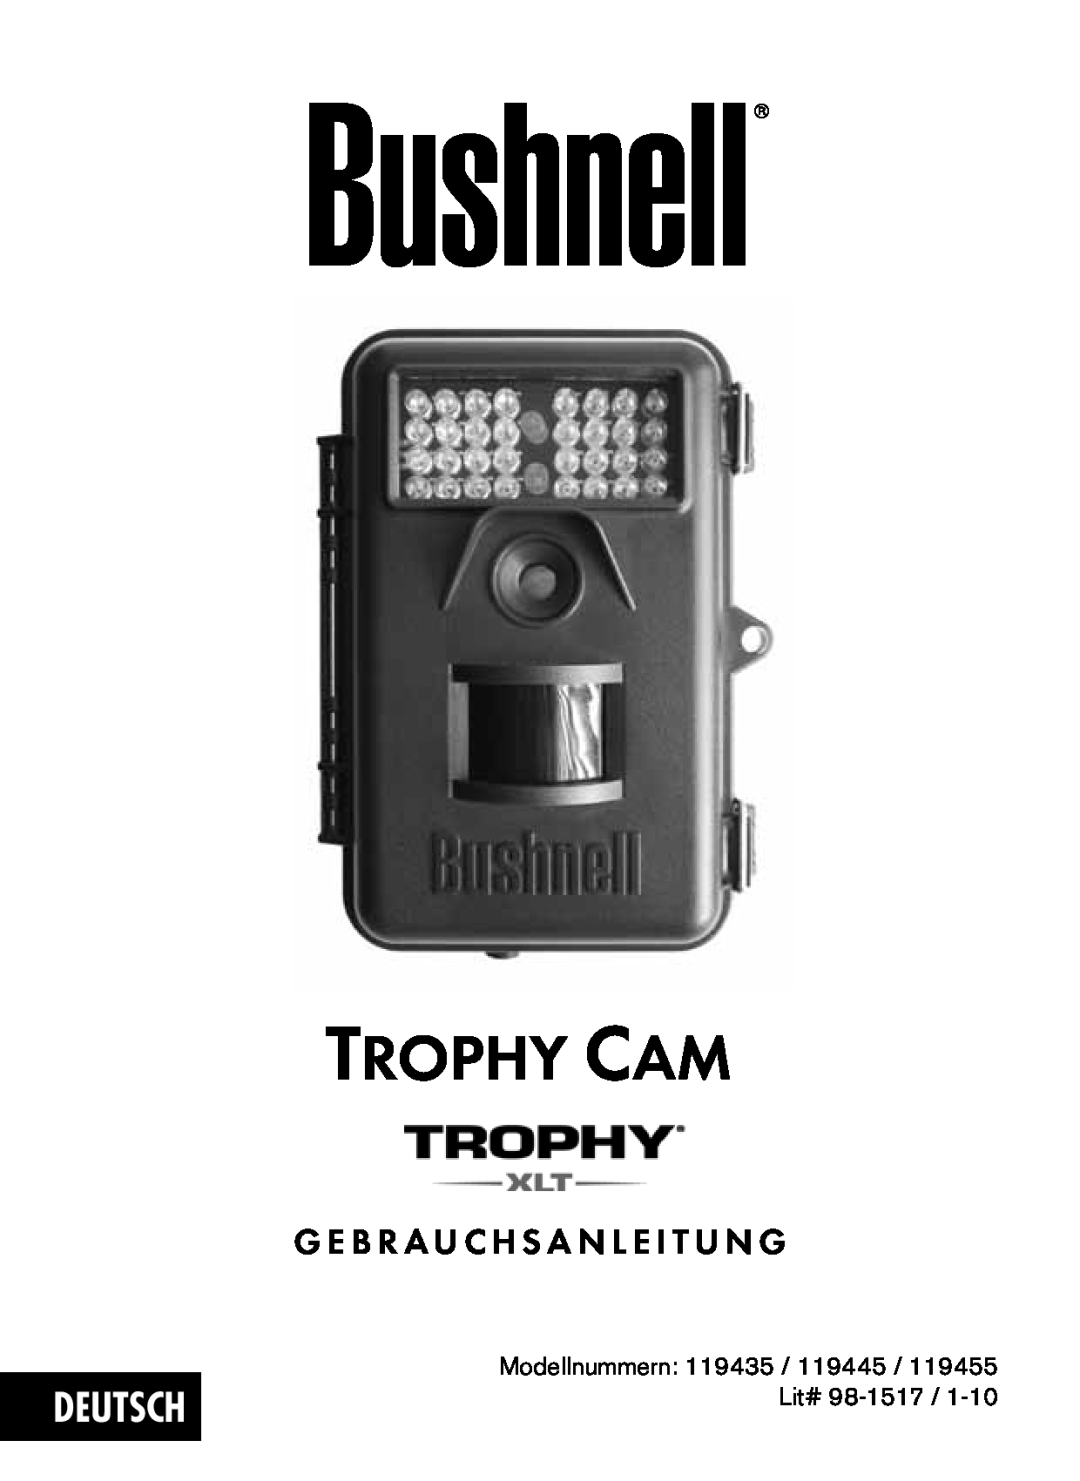 Bushnell 119435, 119455, 119445 instruction manual Deutsch, G E B R A U C H S A N L E I T U N G, Trophy Cam 